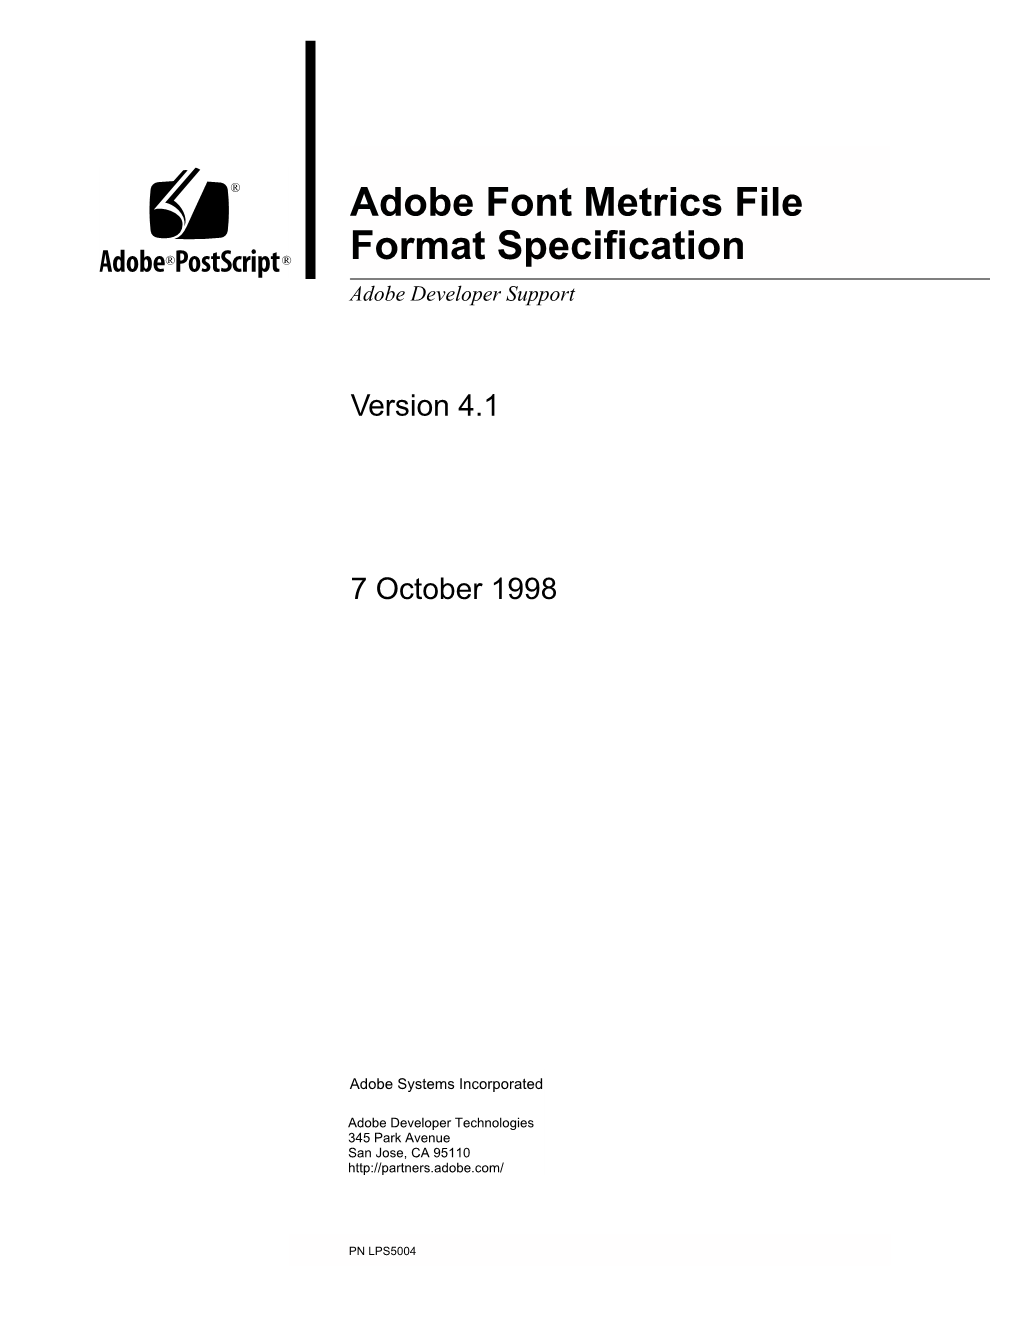 Adobe Font Metrics File Format Specification V4.1